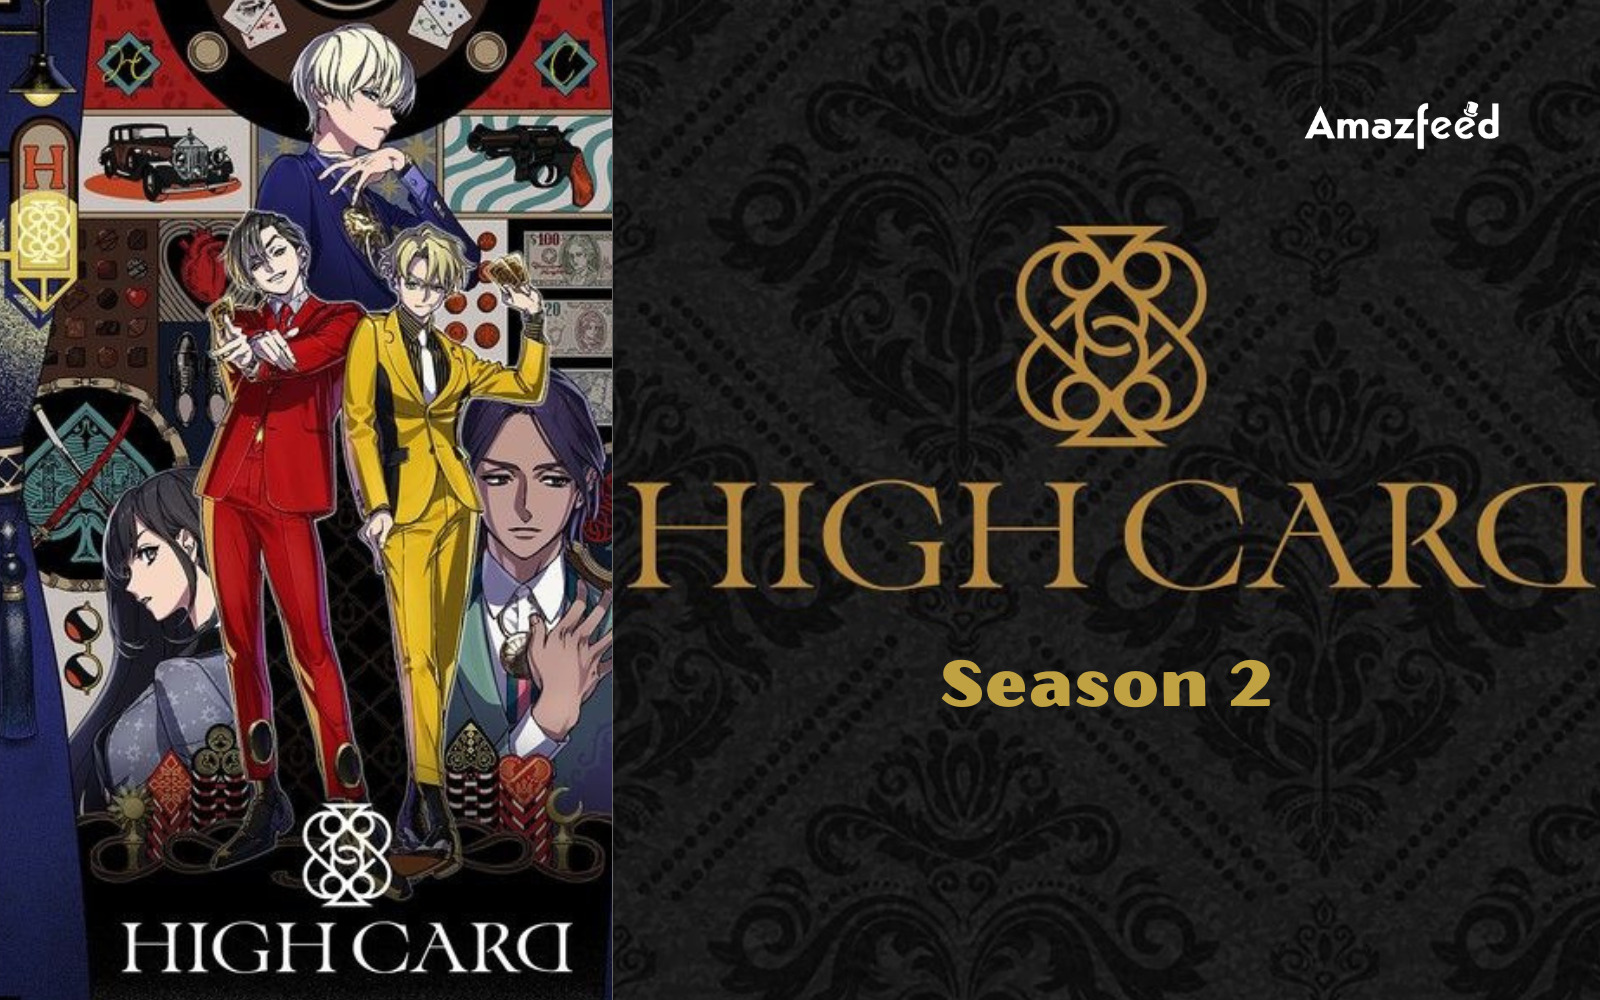 2nd 'High Card' Anime Season Sets Premiere Date